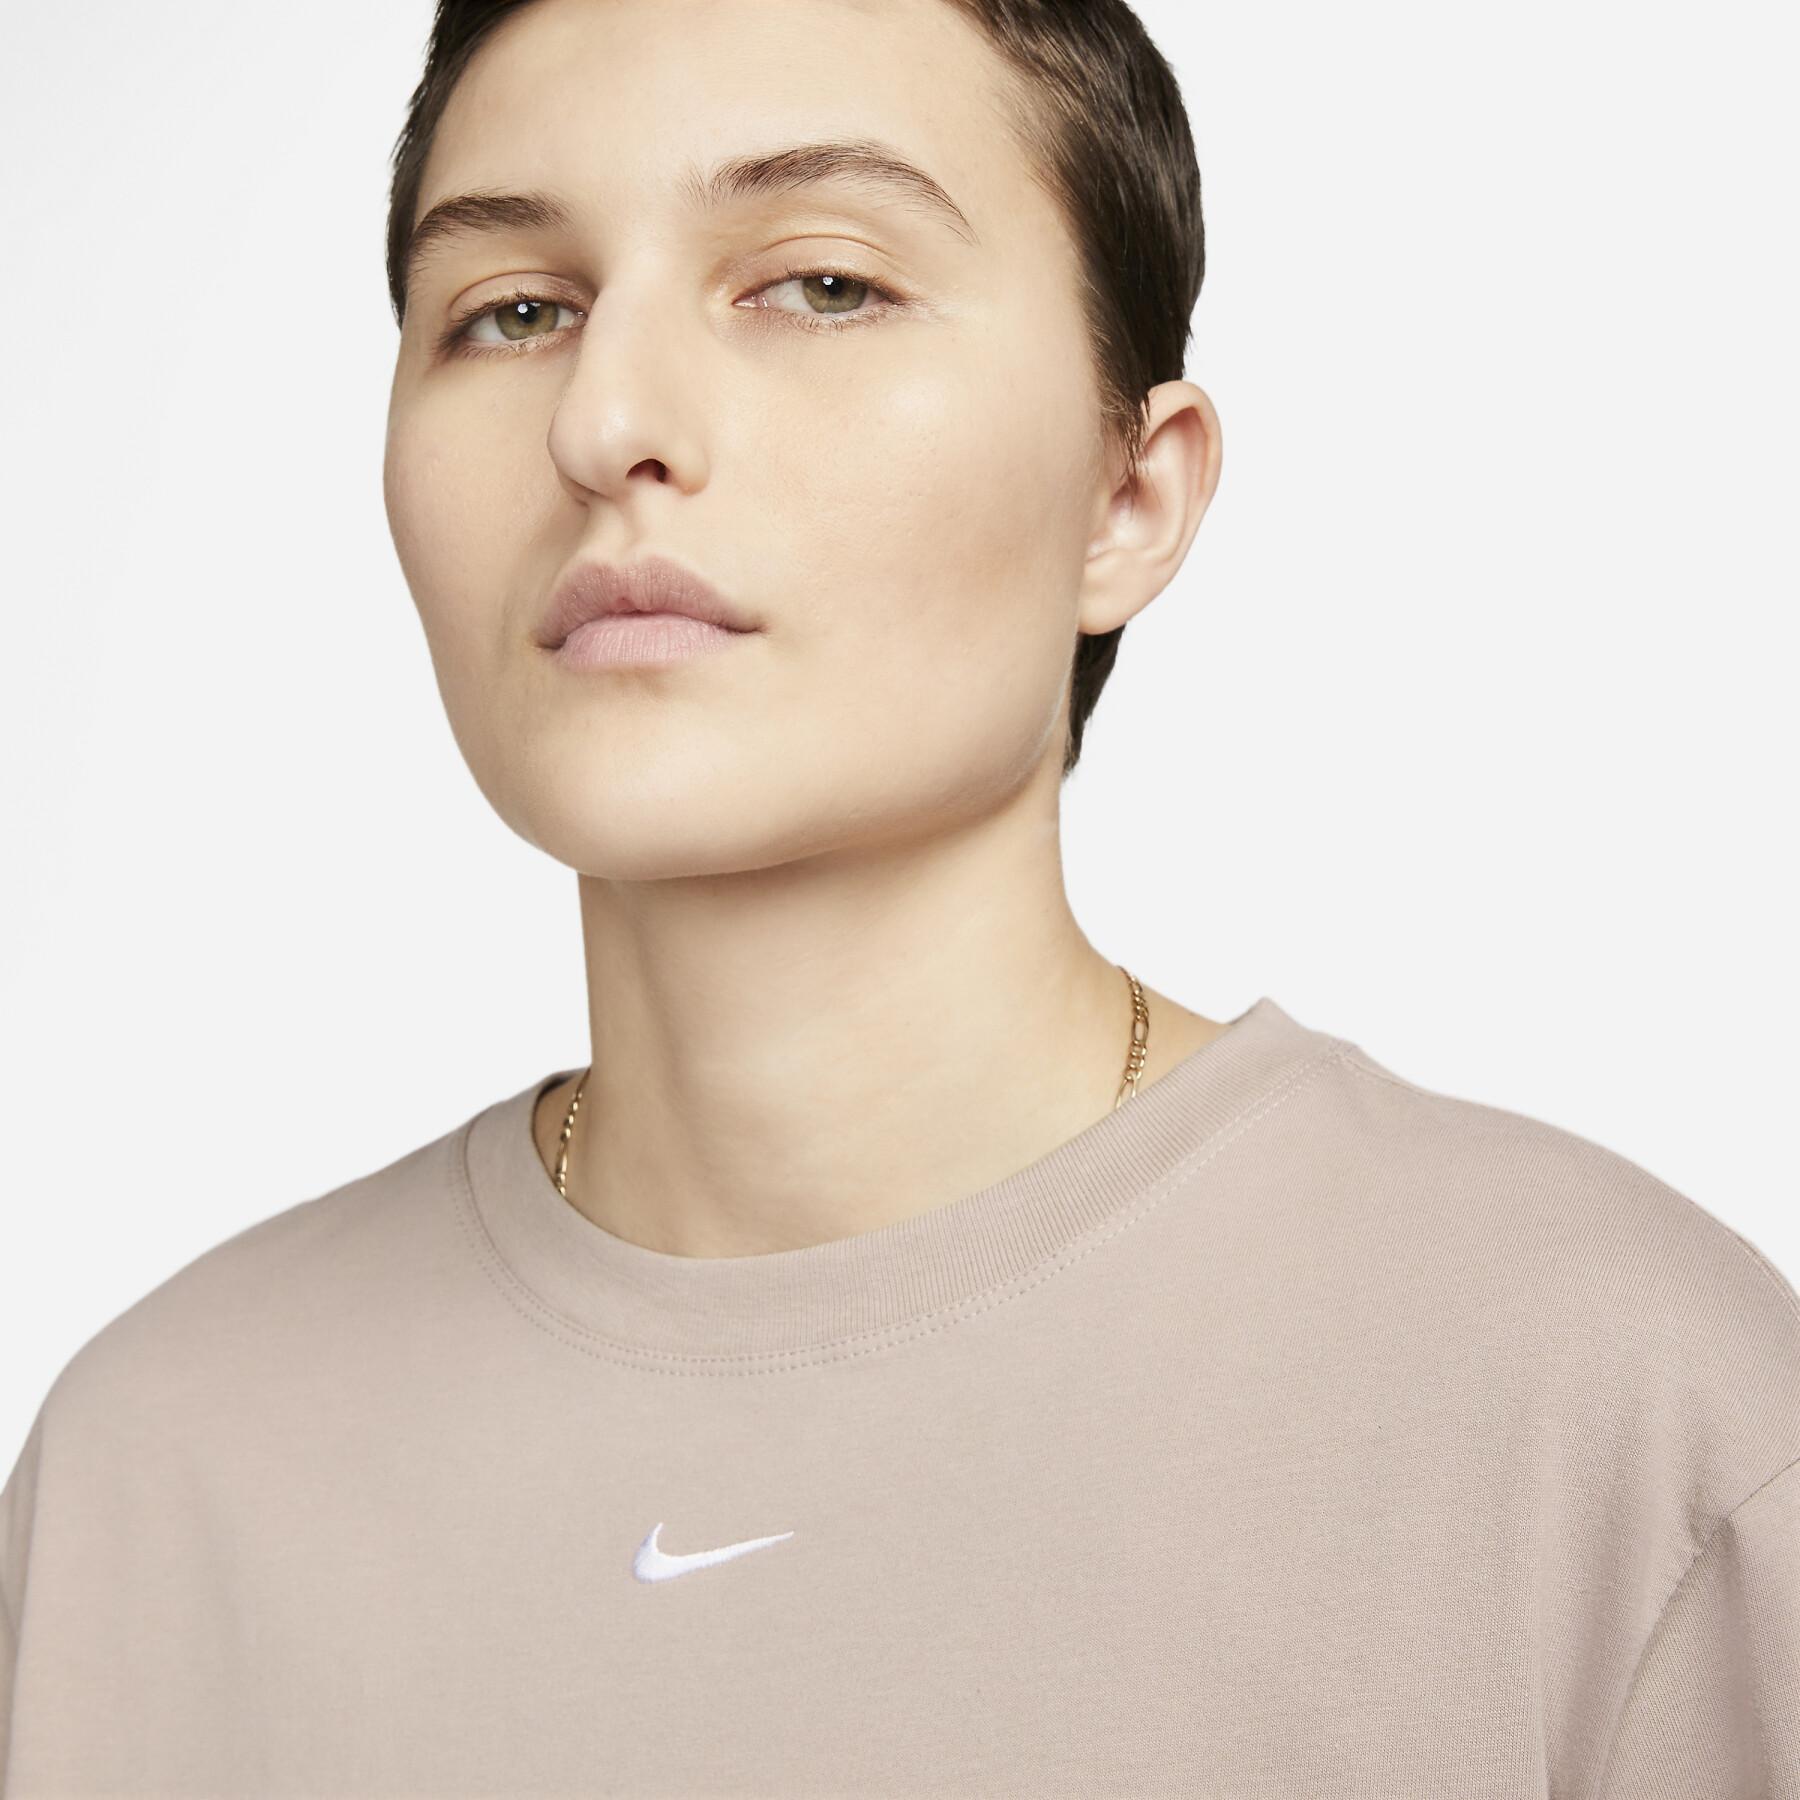 Koszulka damska Nike Essential